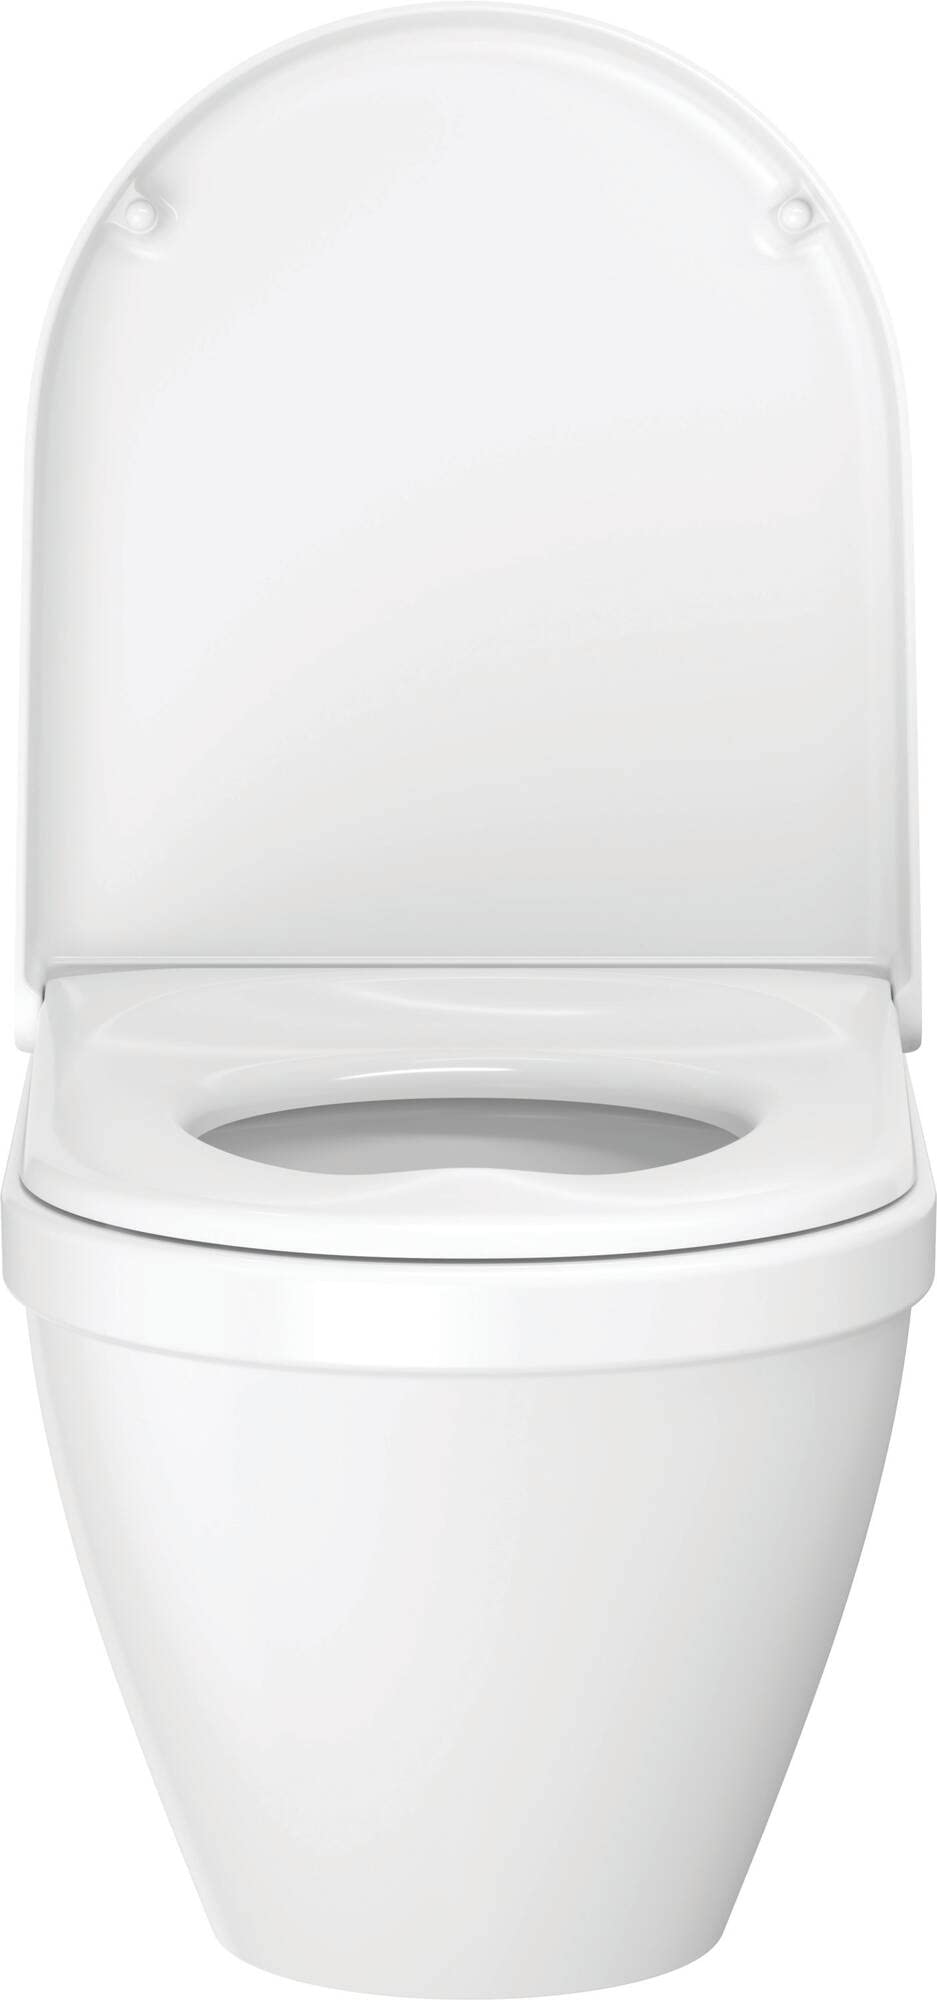 Duravit D0020790000 Toilet Bidet Seats, White